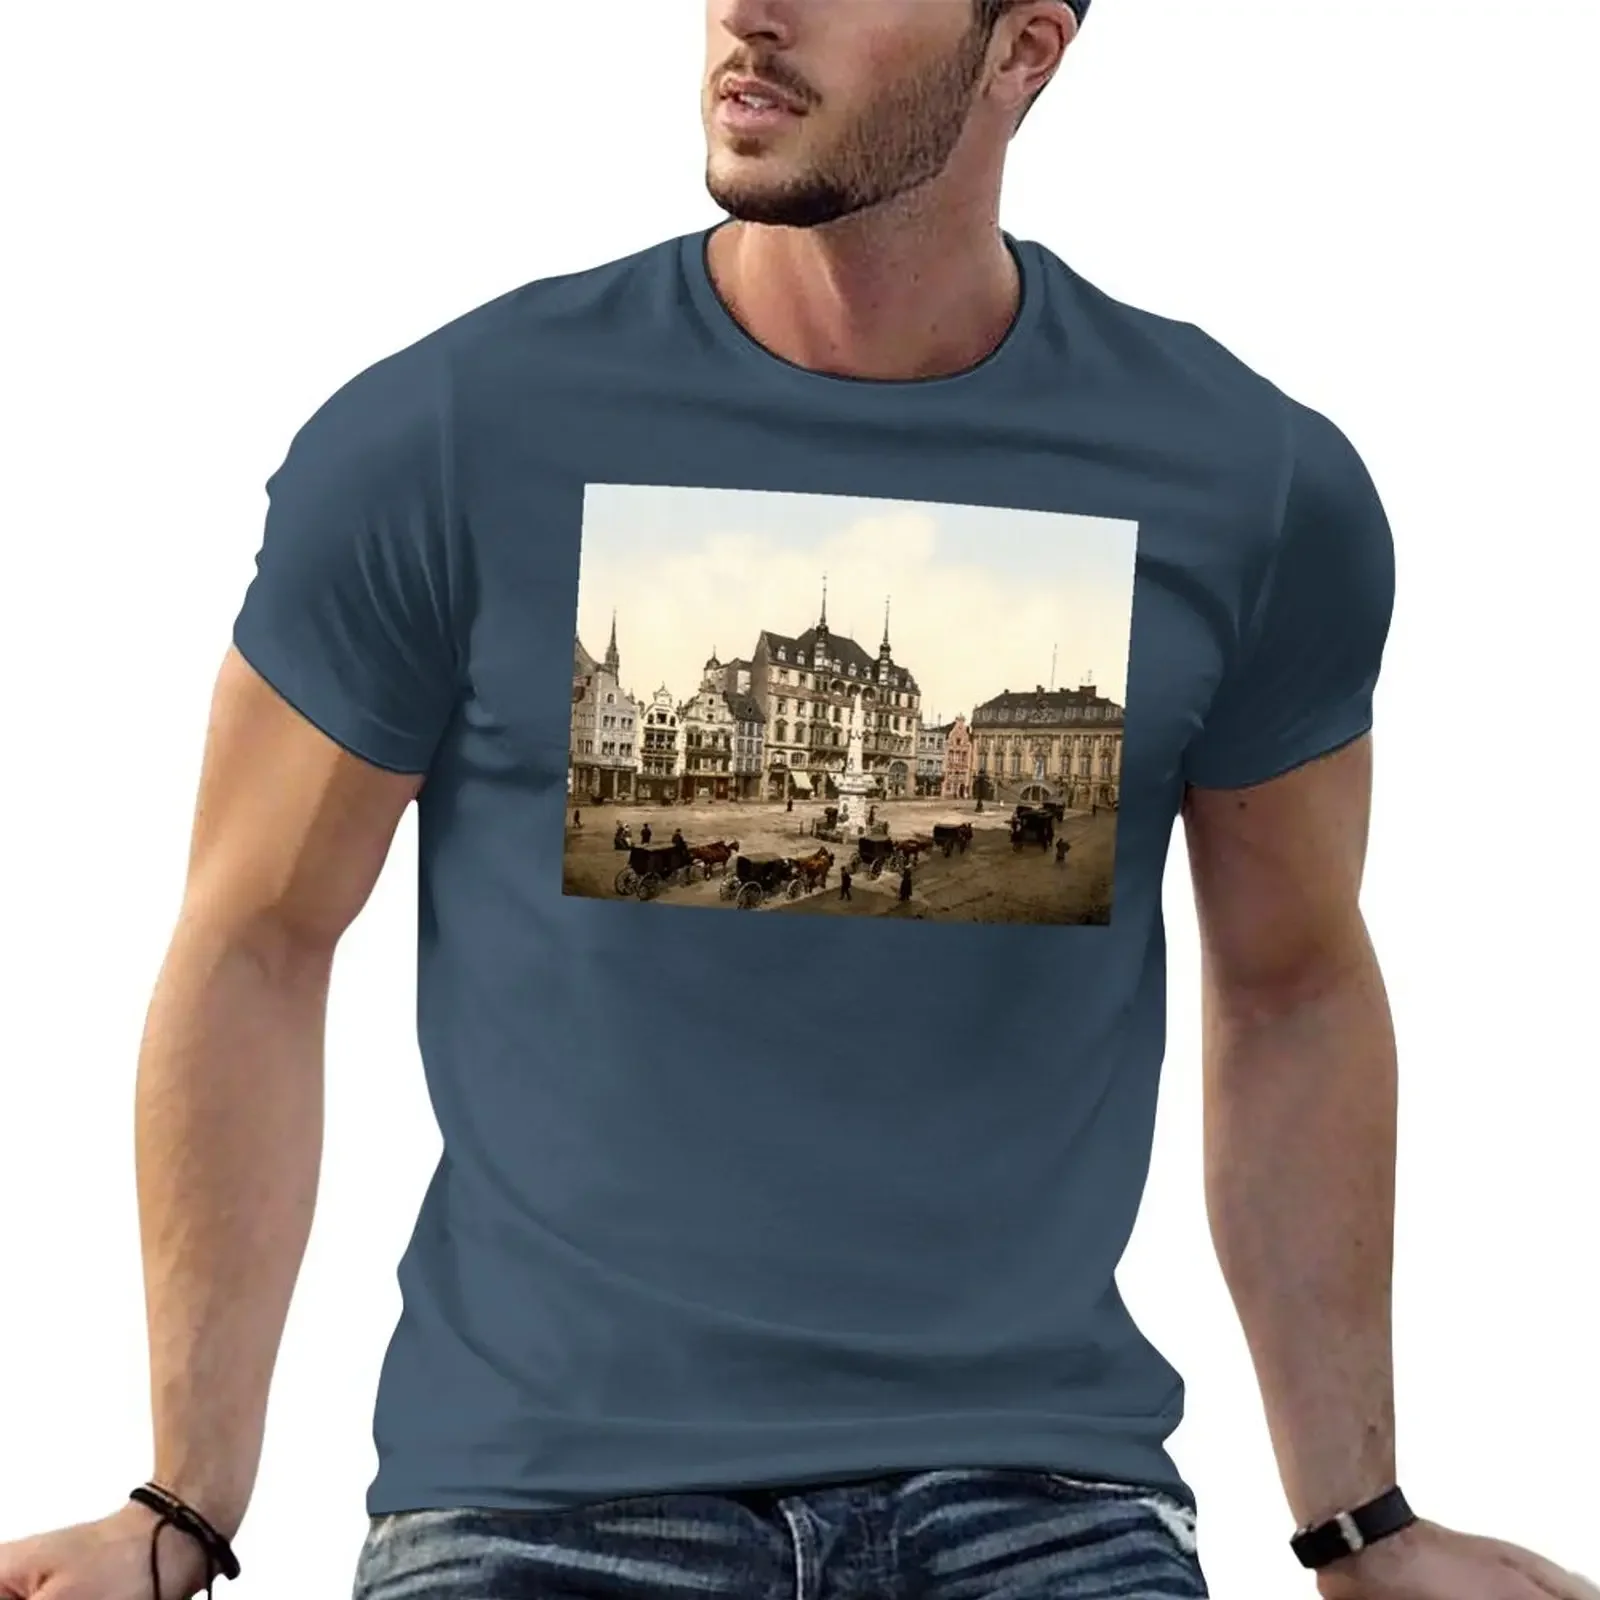 

Vintage 1890s Bonn Germany Marktplatz colour photo T-Shirt funnys boys whites tops t shirts for men pack